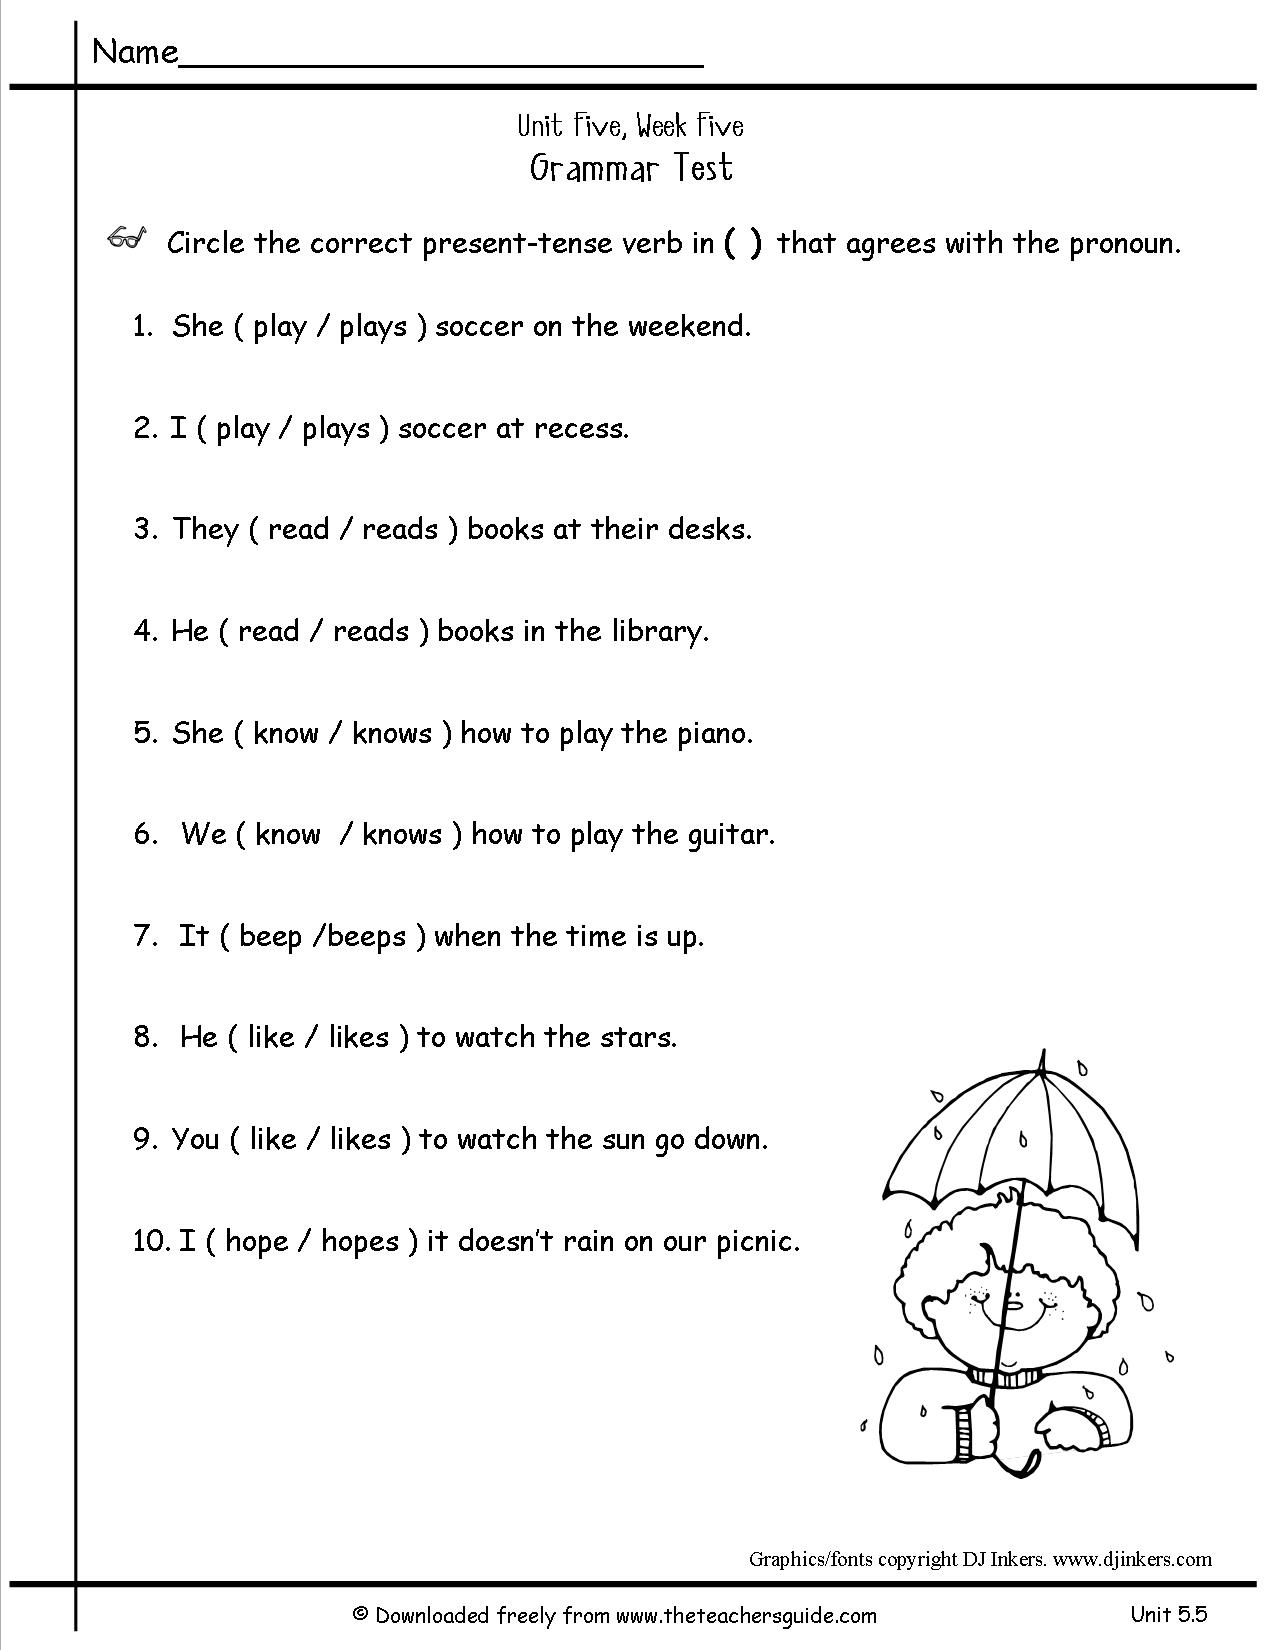 pronouns-worksheet-for-grade-1-50-pronouns-worksheet-for-grade-1-pdf-fatisill